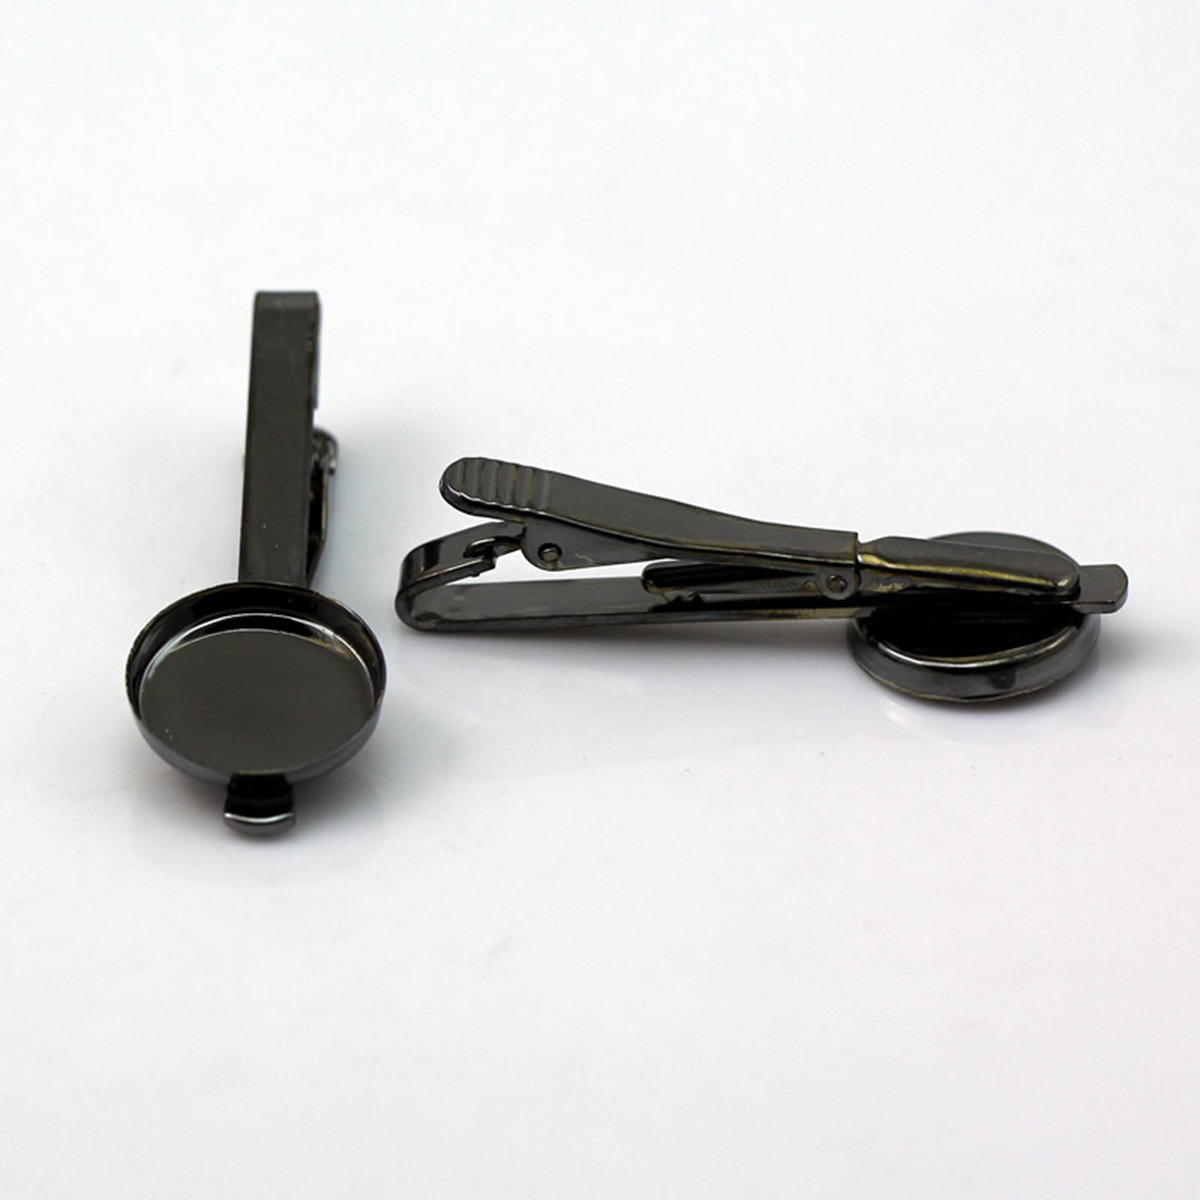 DIY Tie Clip Kit - w/20mm Bezel Setting,Length:54mm,Nickel-Free,Lead-Safe,